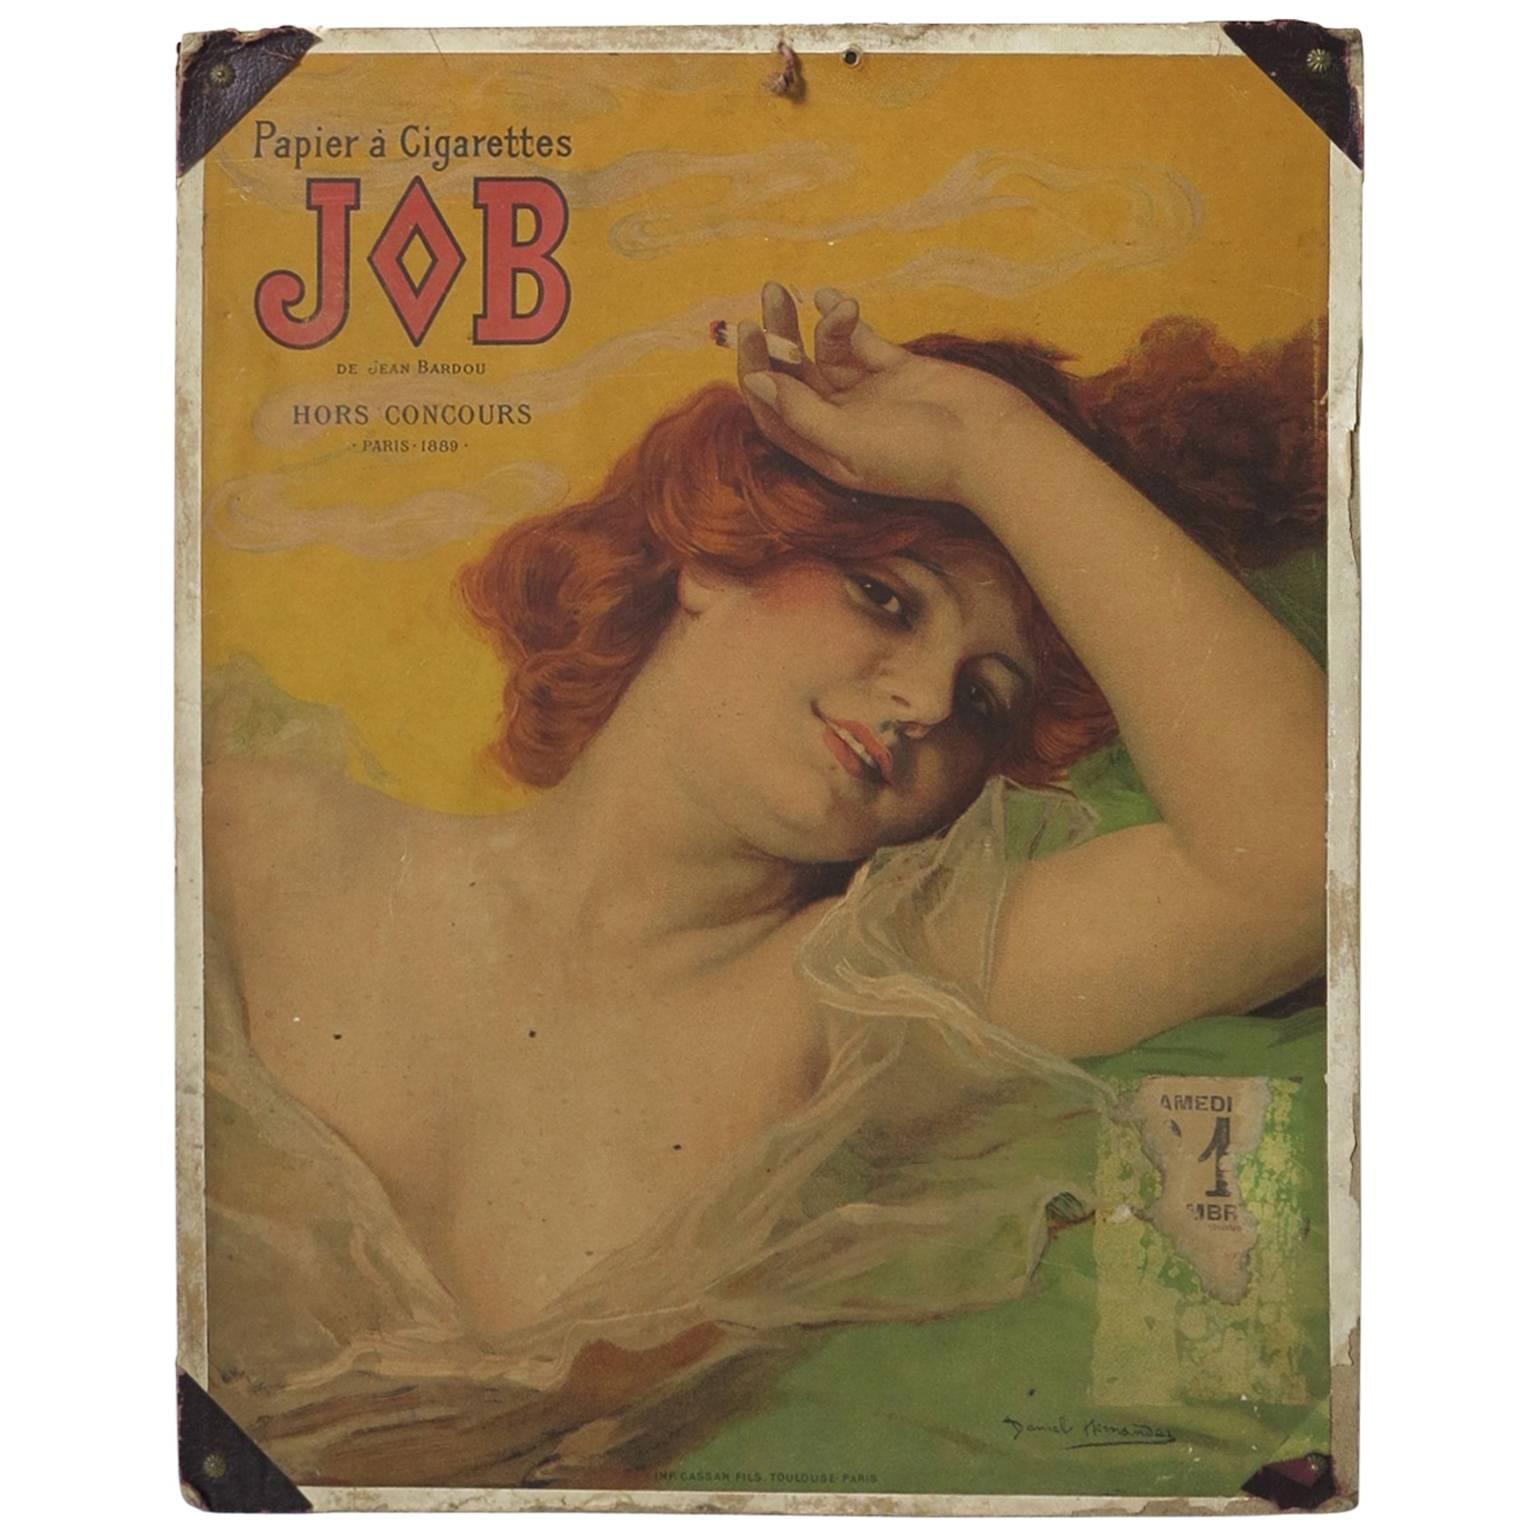 Rare Art Nouveau cardboard at "JOB Cigarettes" 1889 by Daniel Hernandez For Sale